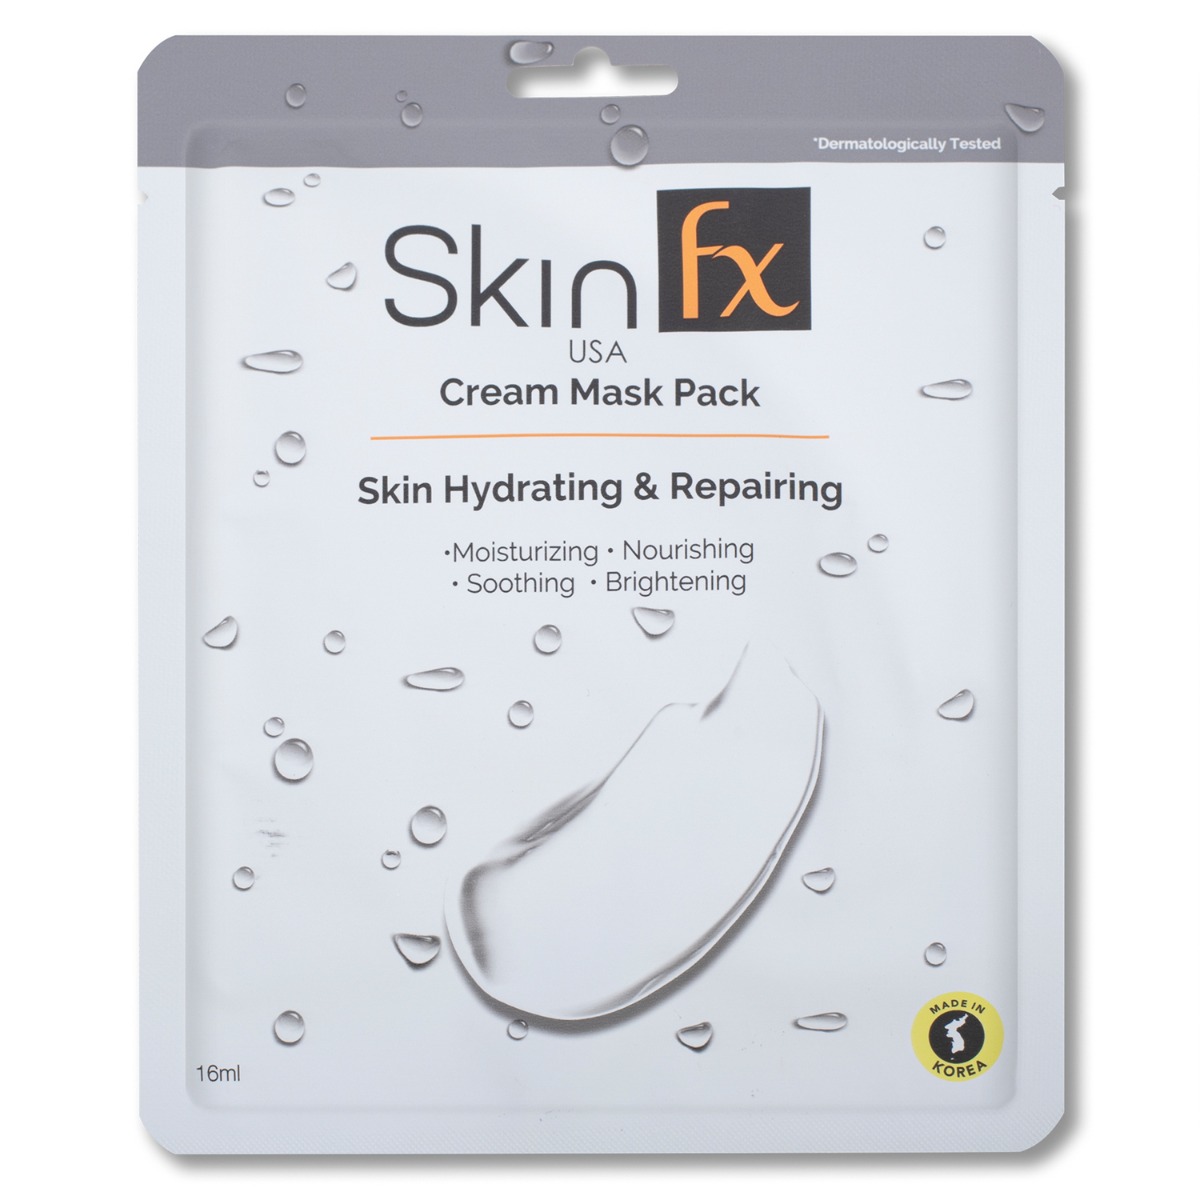 Skin Fx Cream Mask For Skin Hydrating & Repairing, 16ml